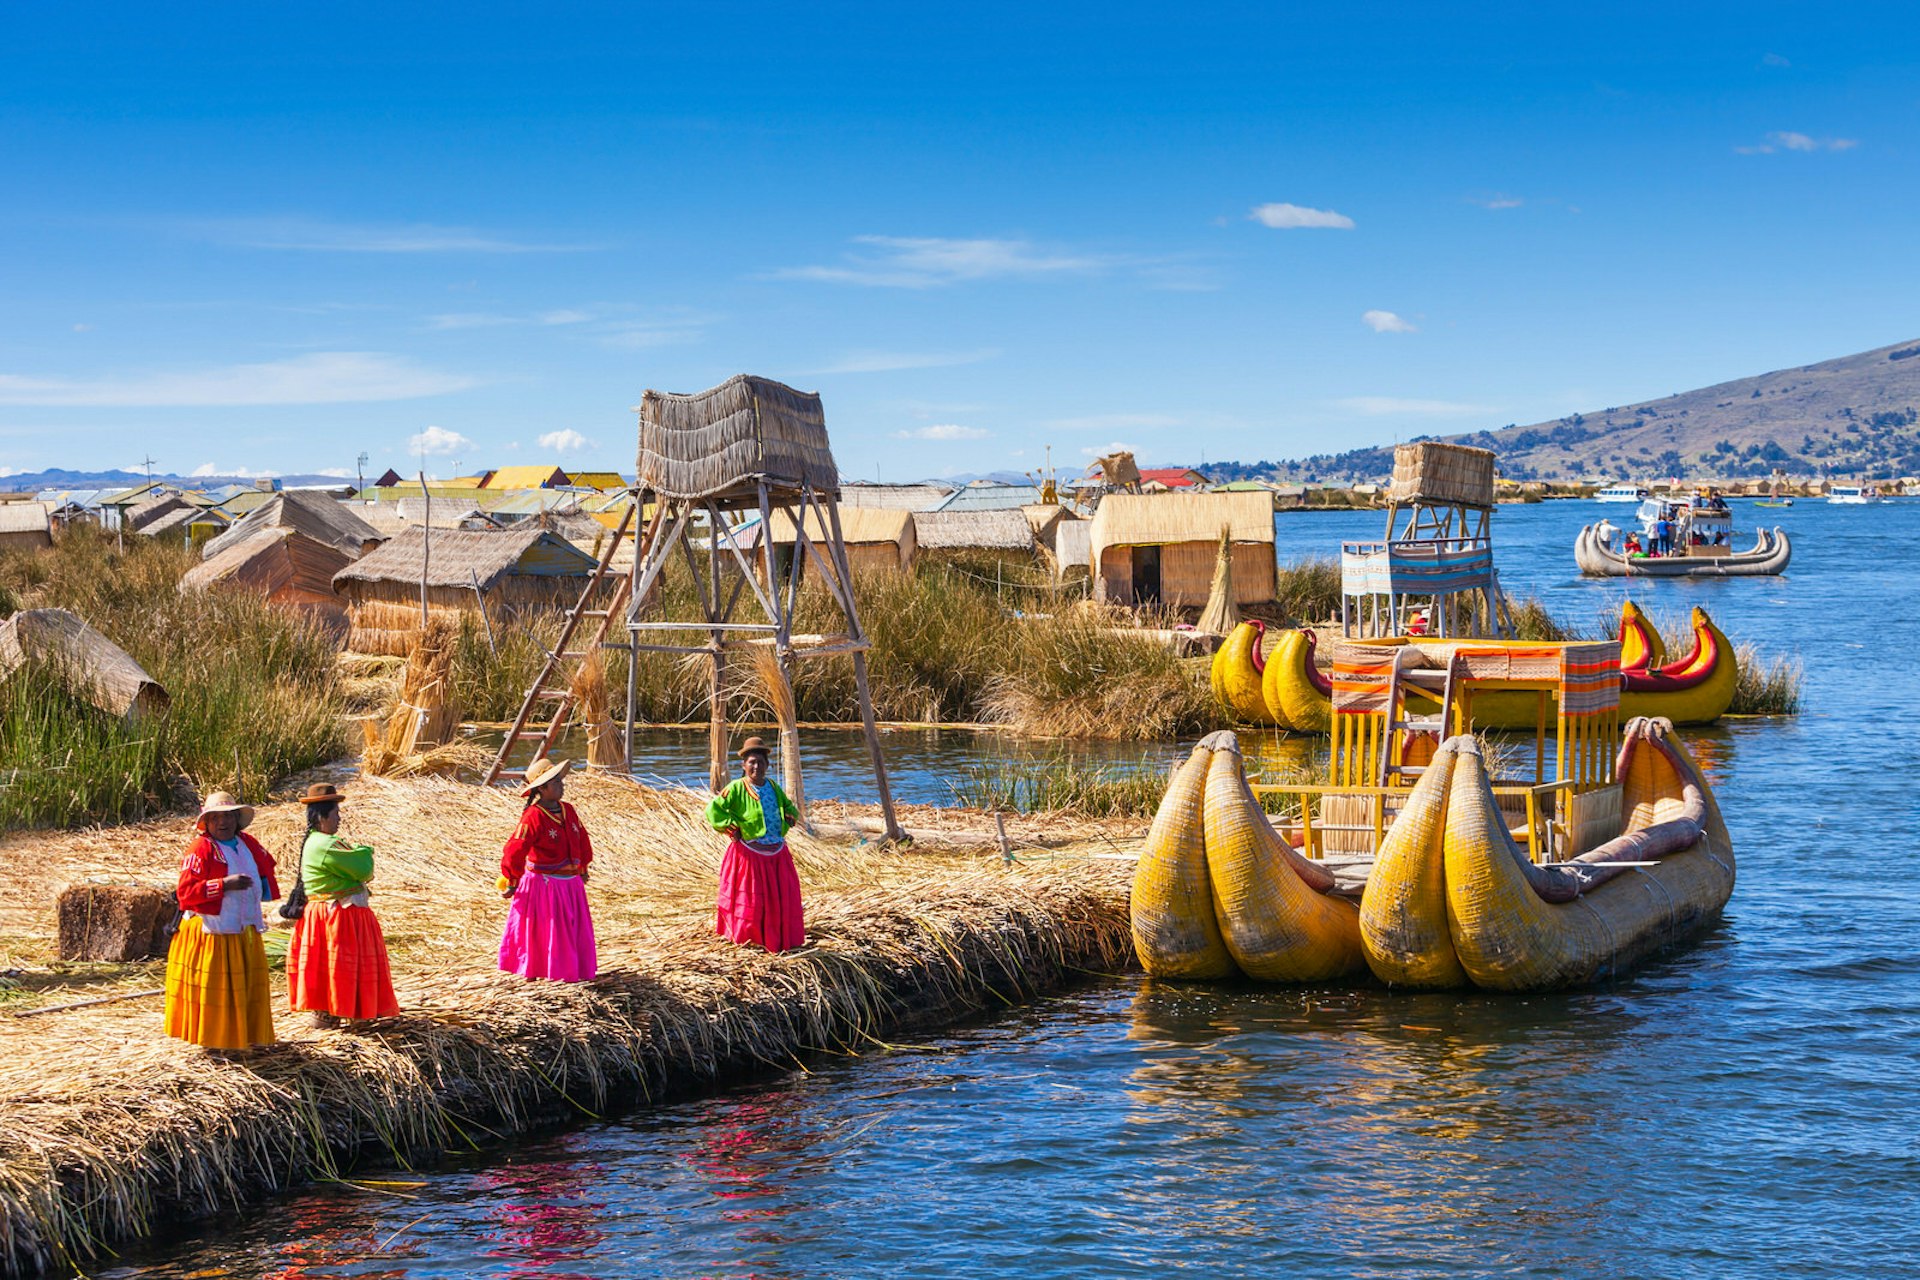 Great lakes – Lake Titicaca